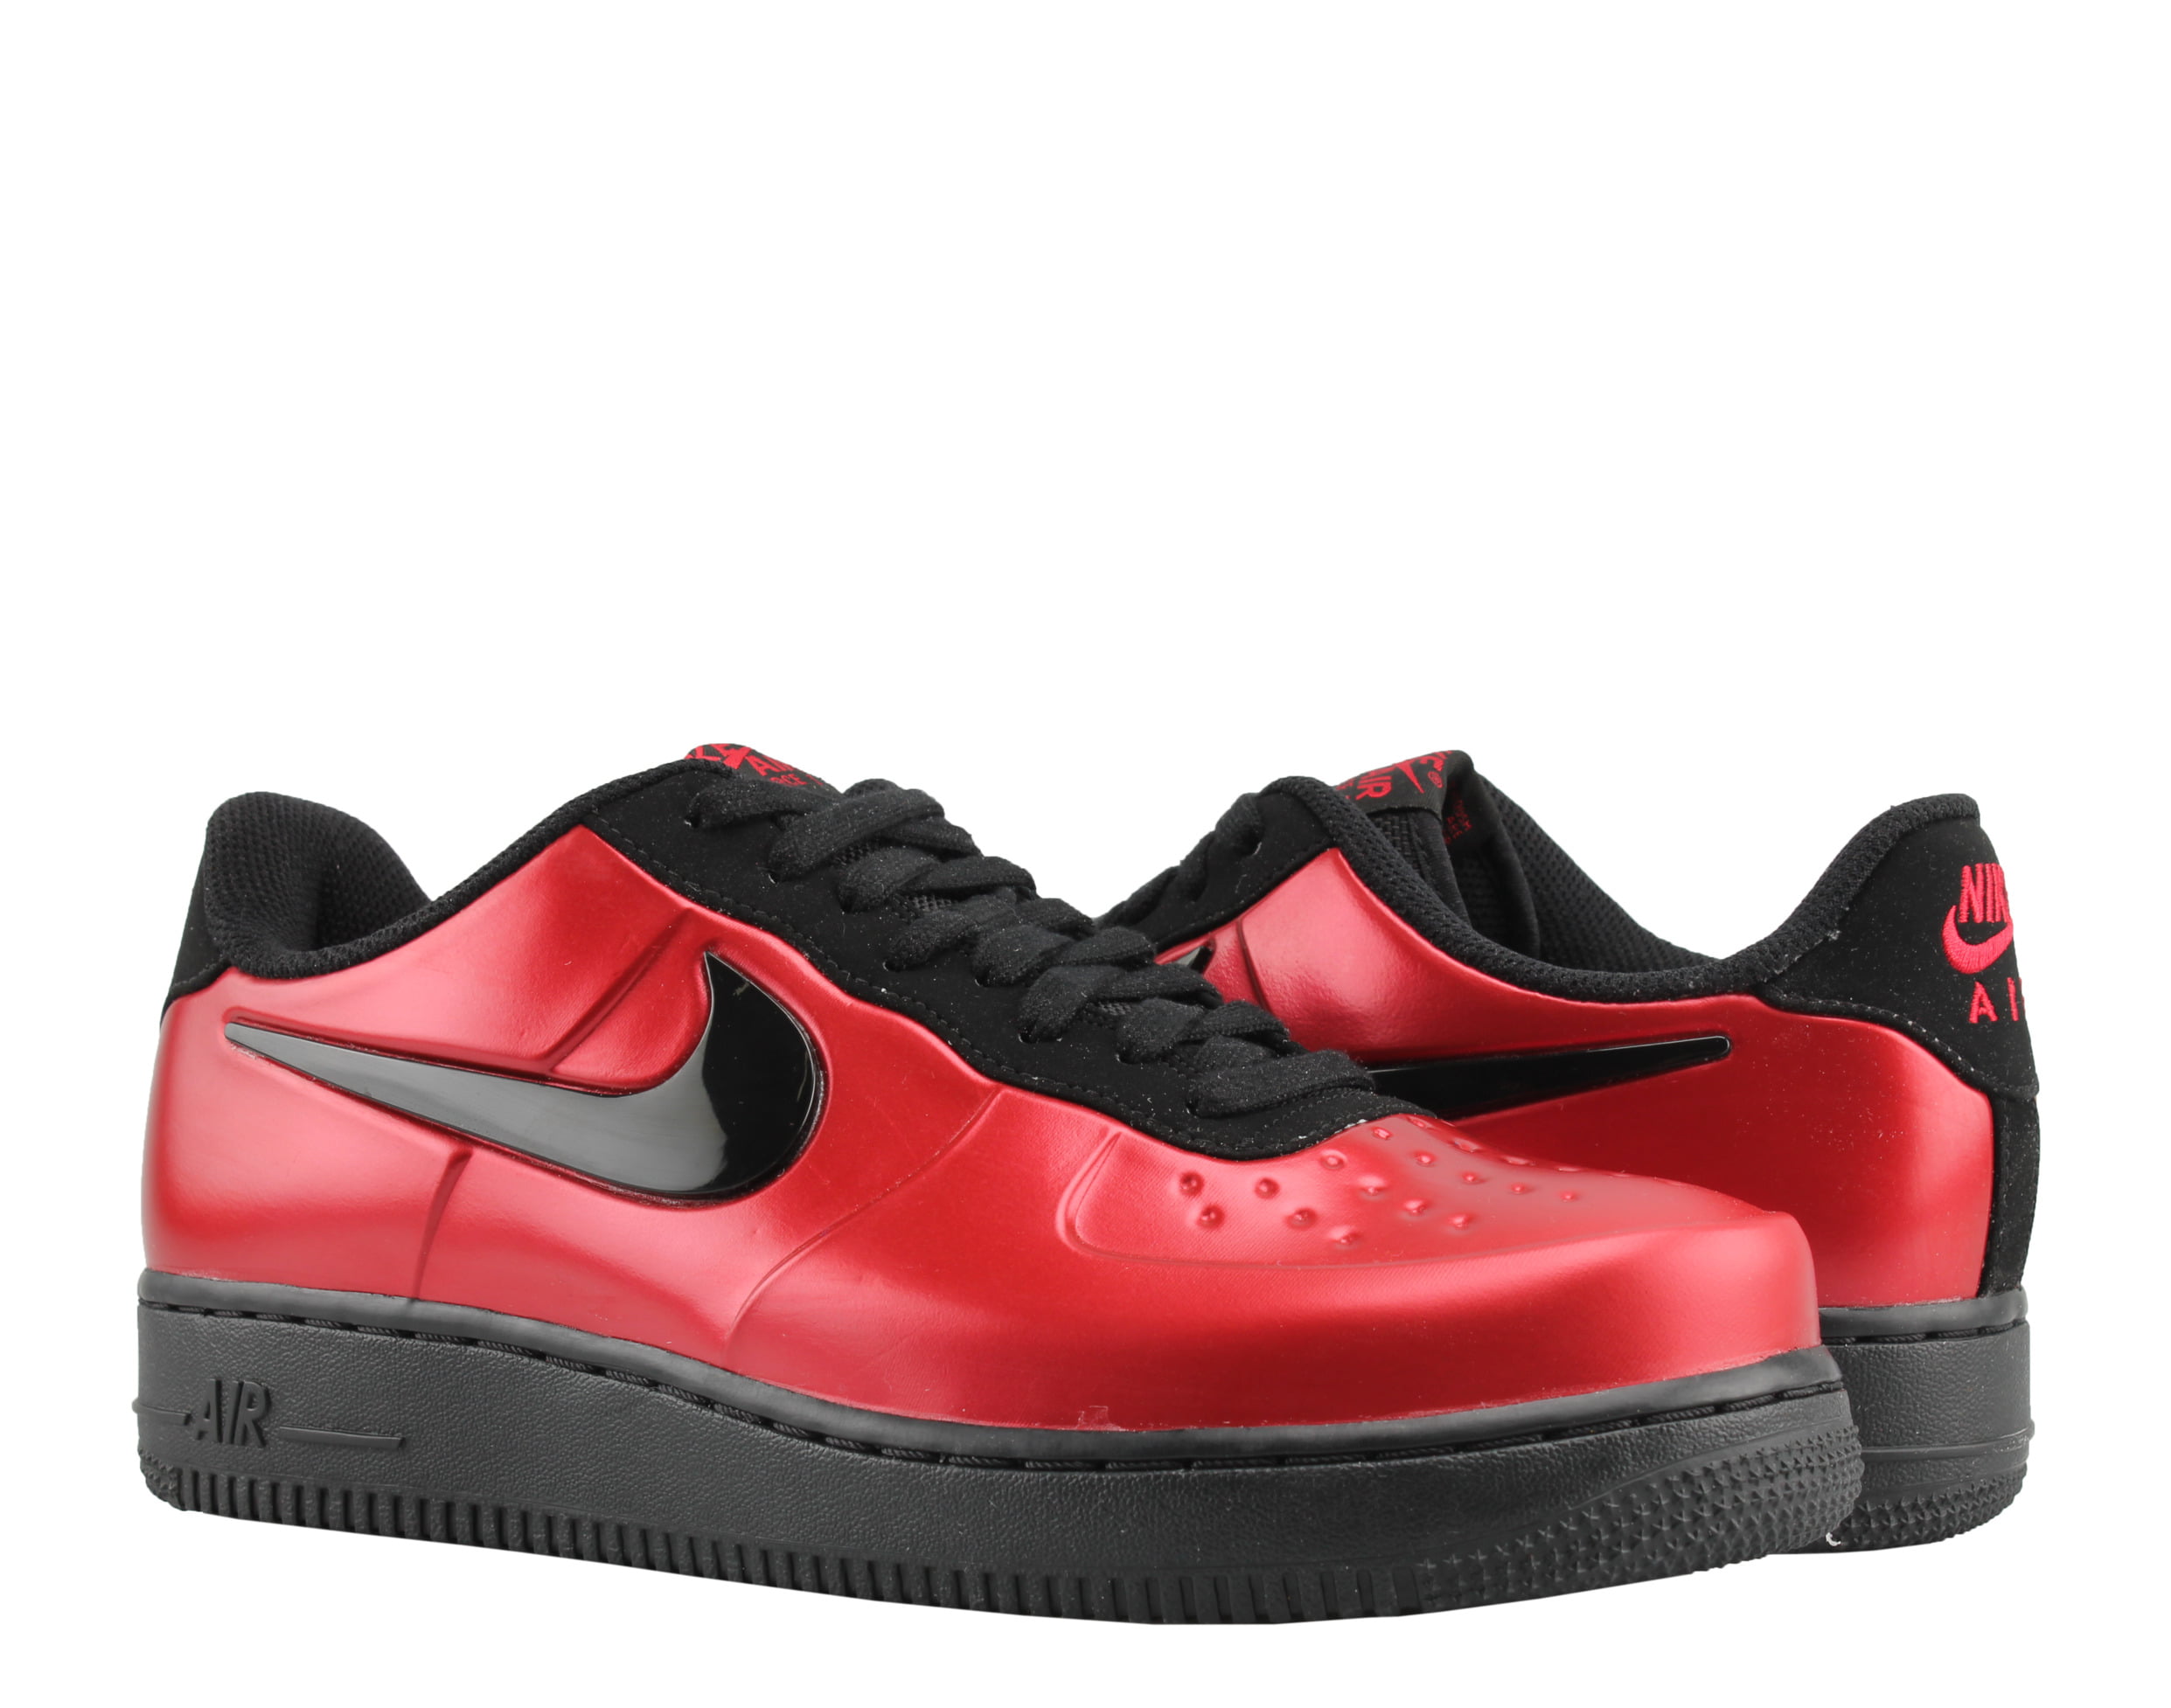 católico confirmar Descuidado Nike AF1 Foamposite Pro Cup Men's Basketball Shoes Size 10.5 - Walmart.com